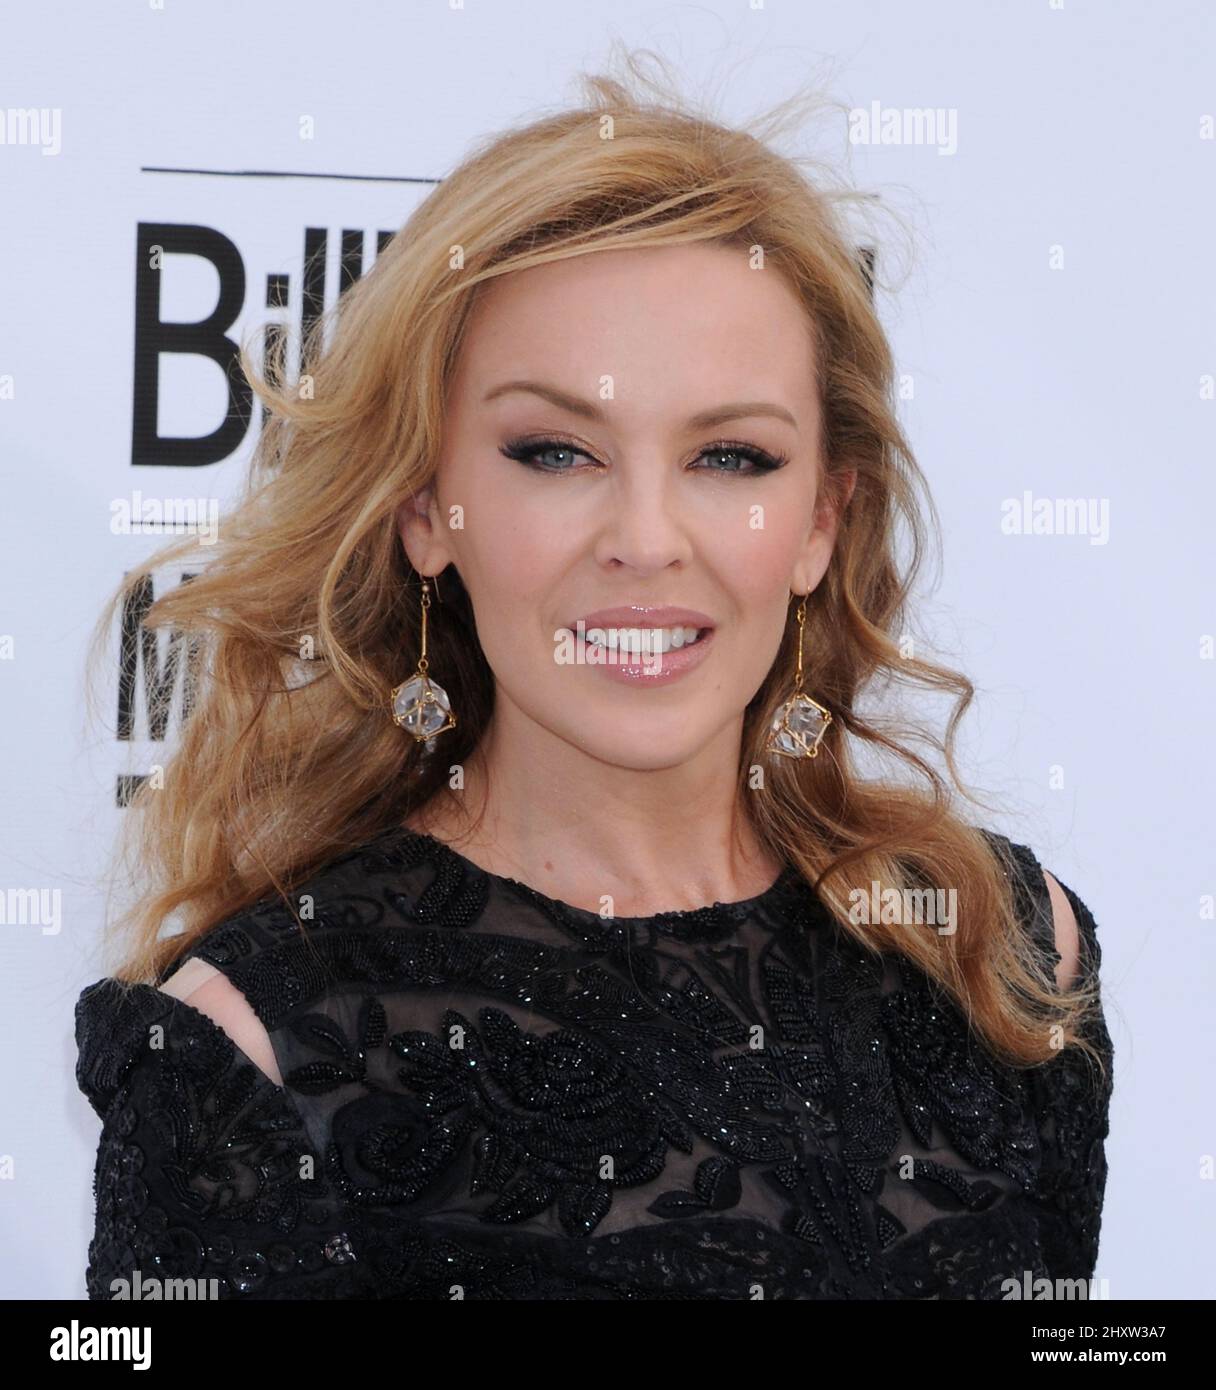 Kylie Minogue at the 2011 Billboard Music Awards held at the MGM Grand ...